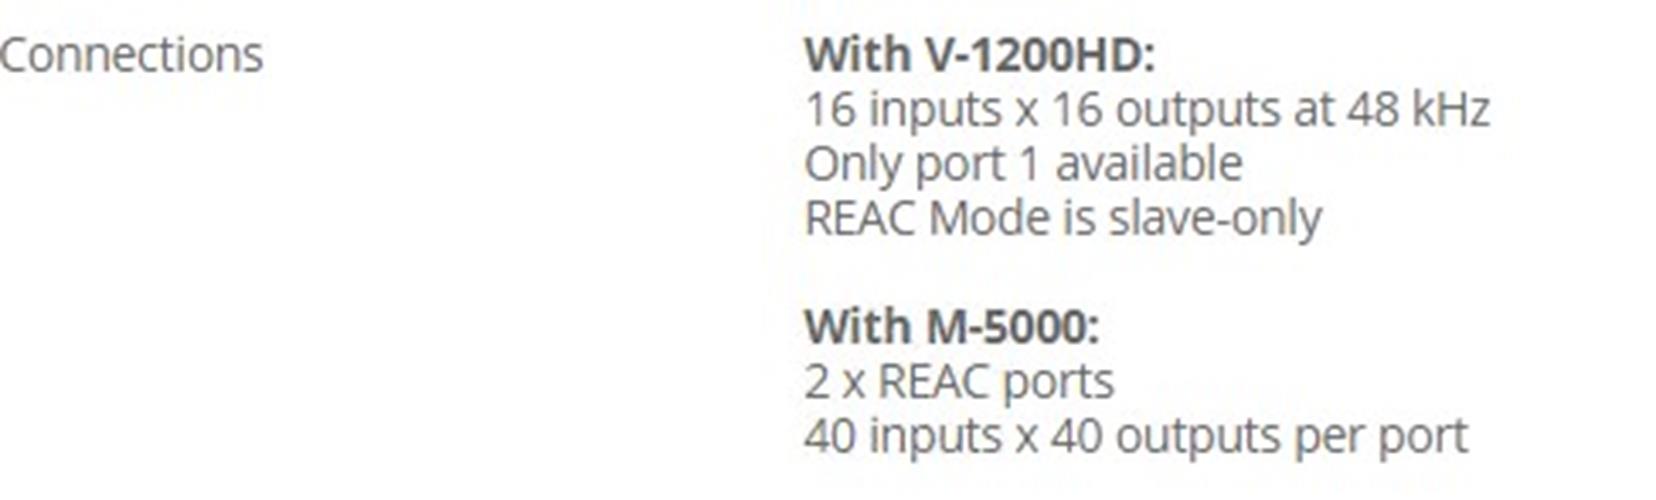 Roland REAC Expansion Interface XI-REAC - Studio AMG